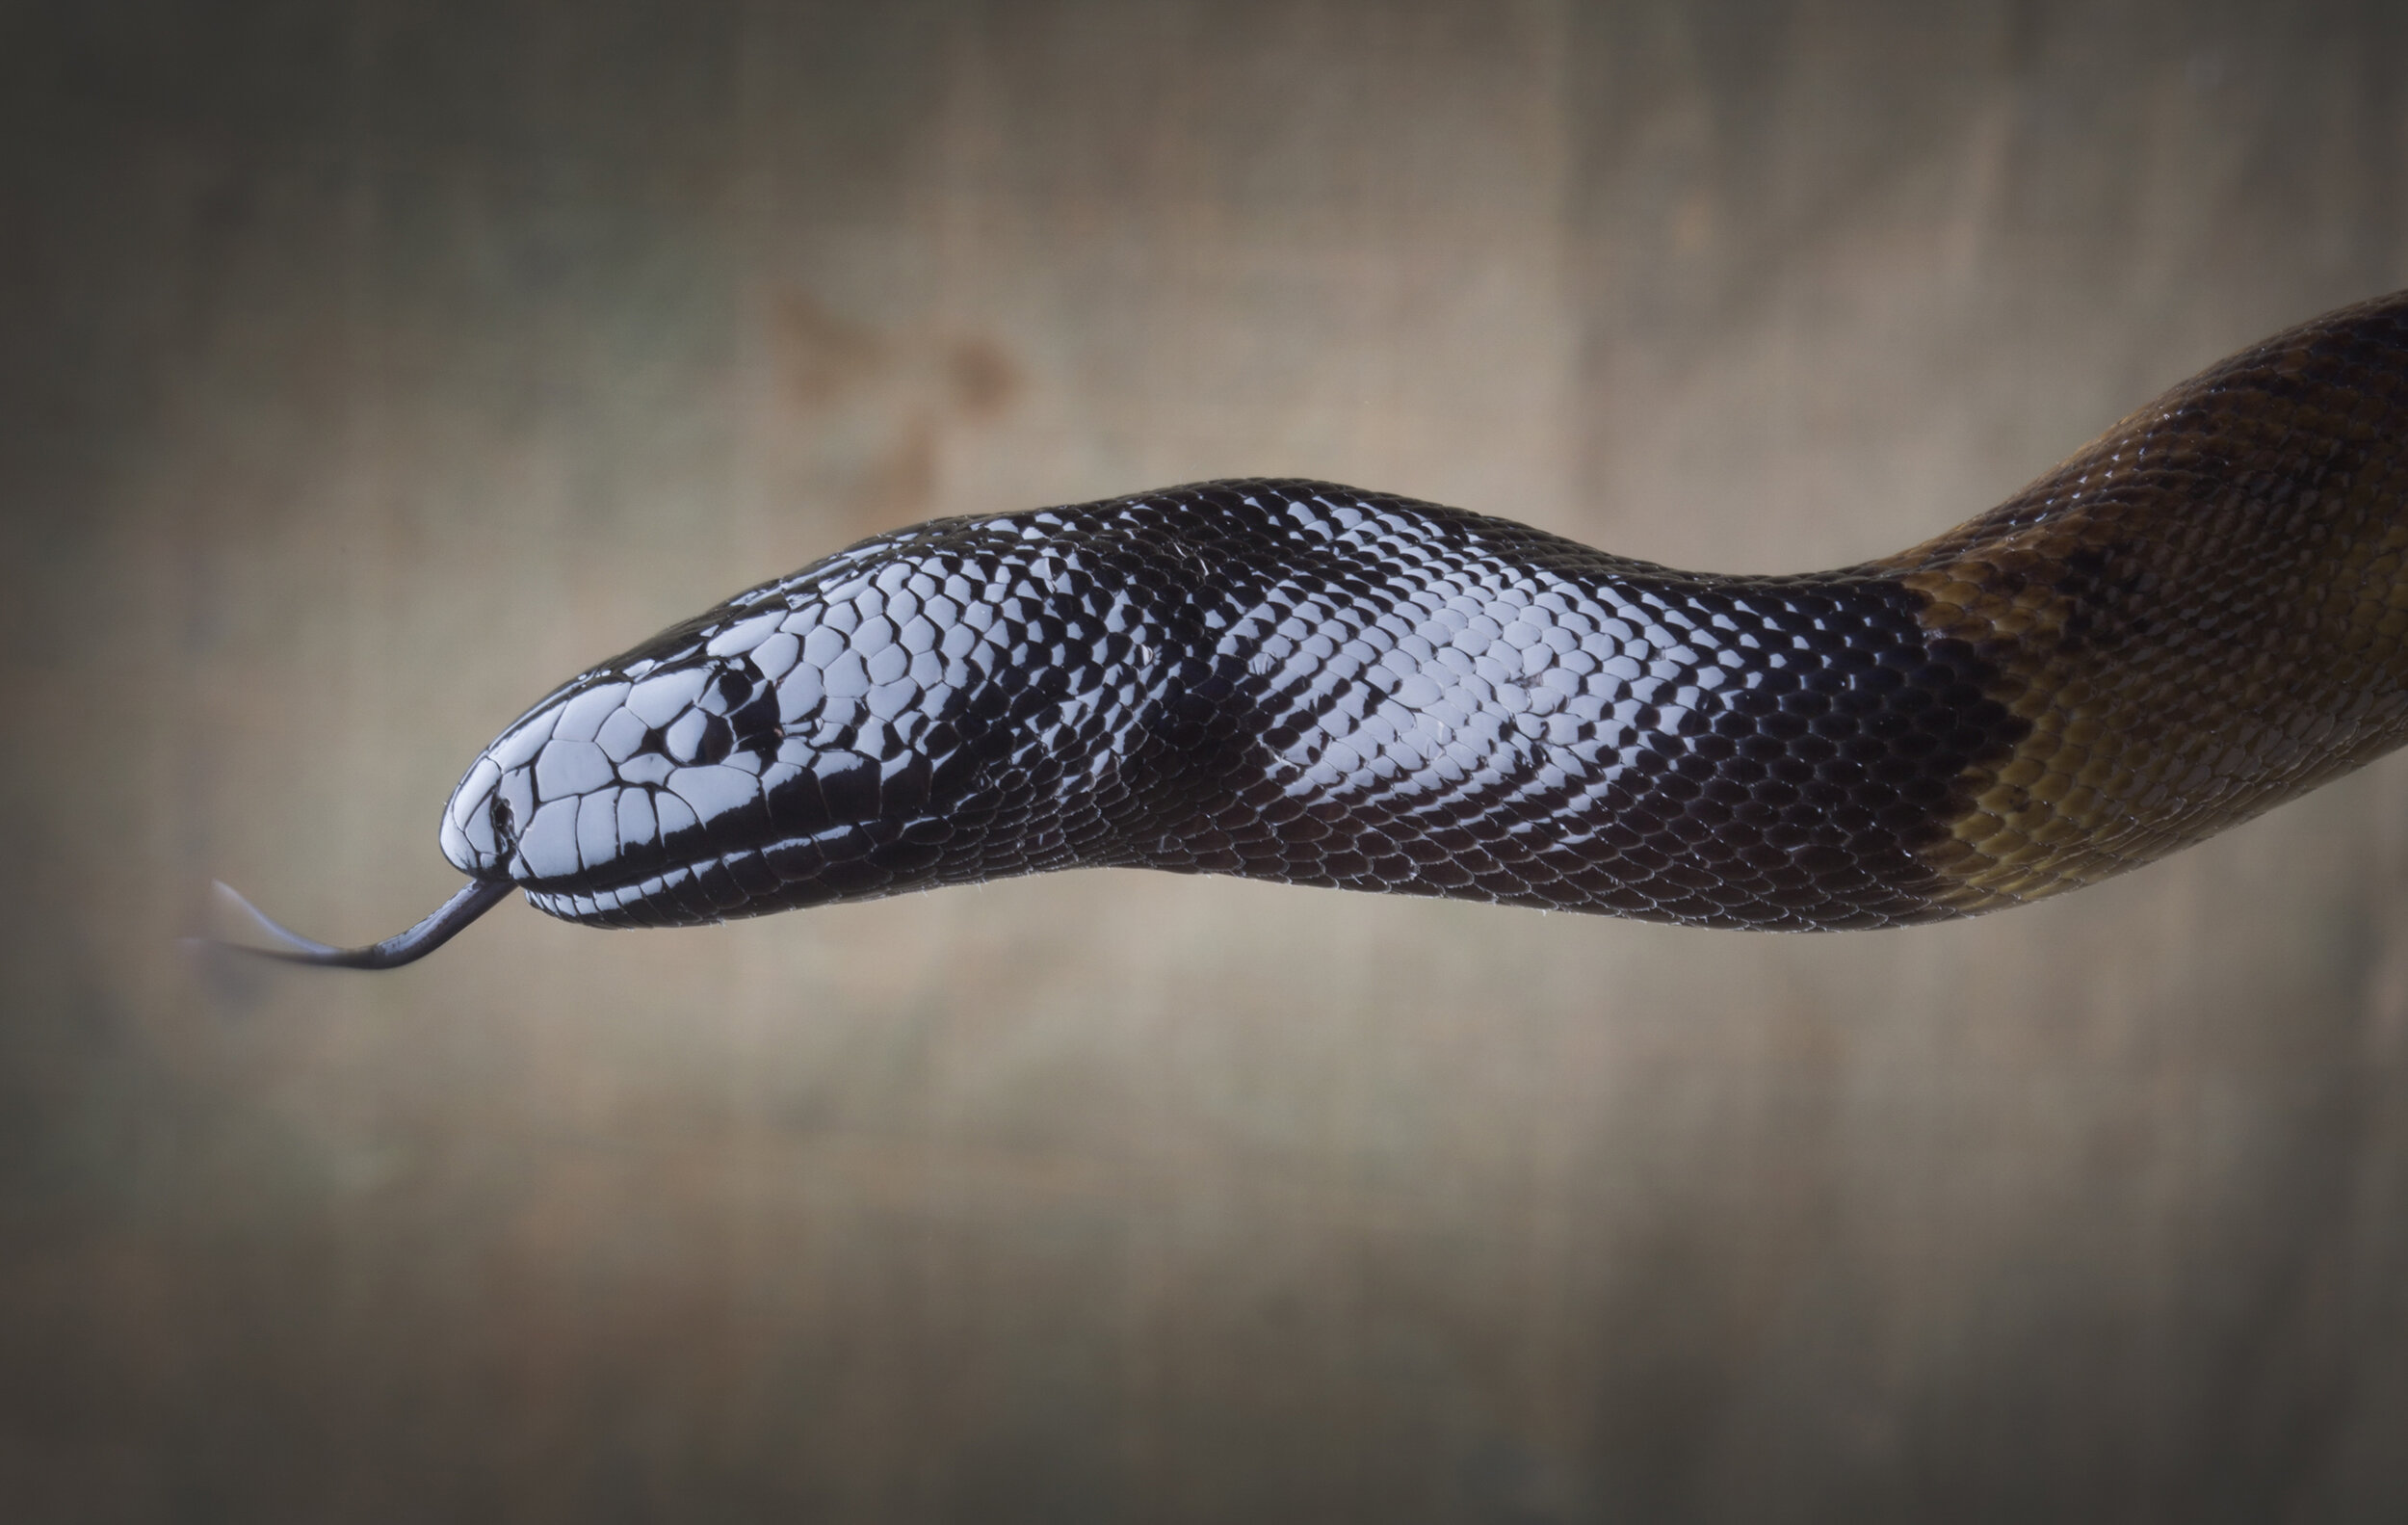  Black Headed Python, (file shot, copyright Russell Shakespeare/Australia Zoo) 